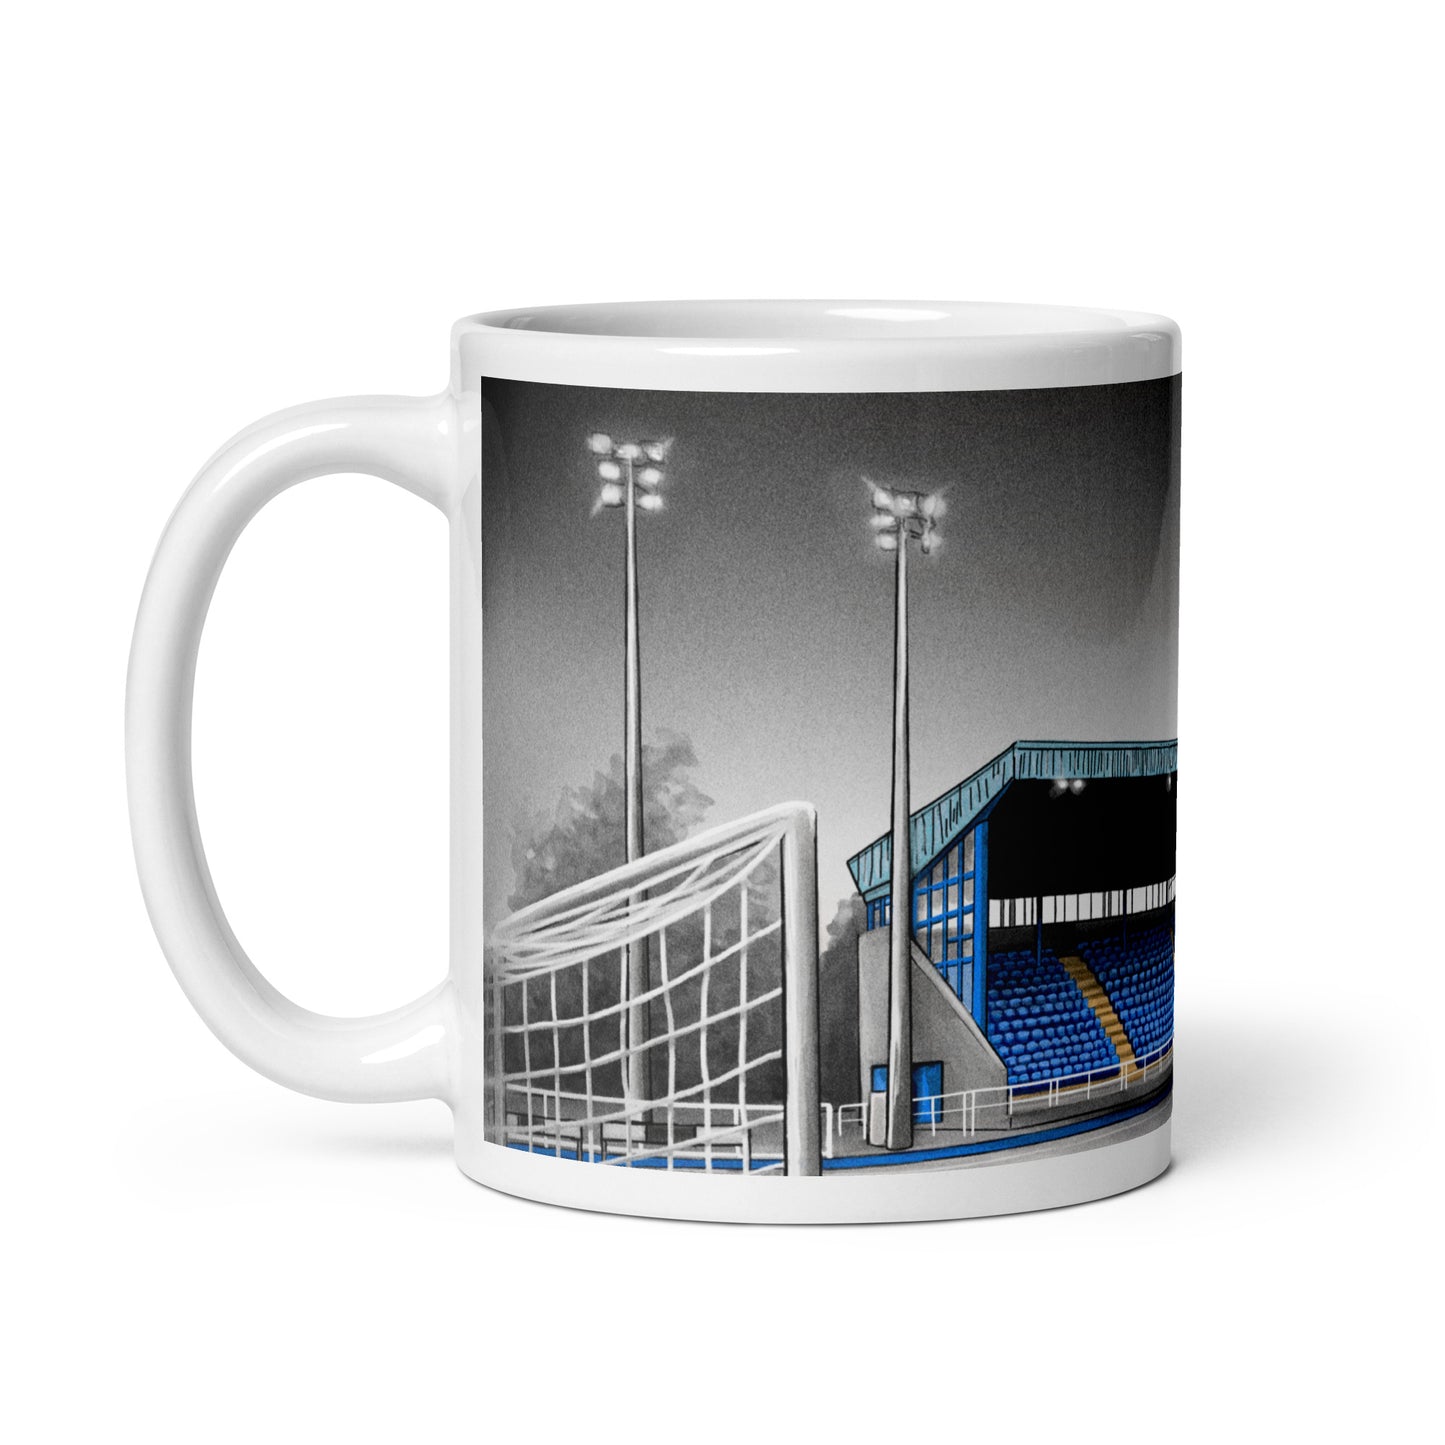 The RSC Waterford FC glossy mug